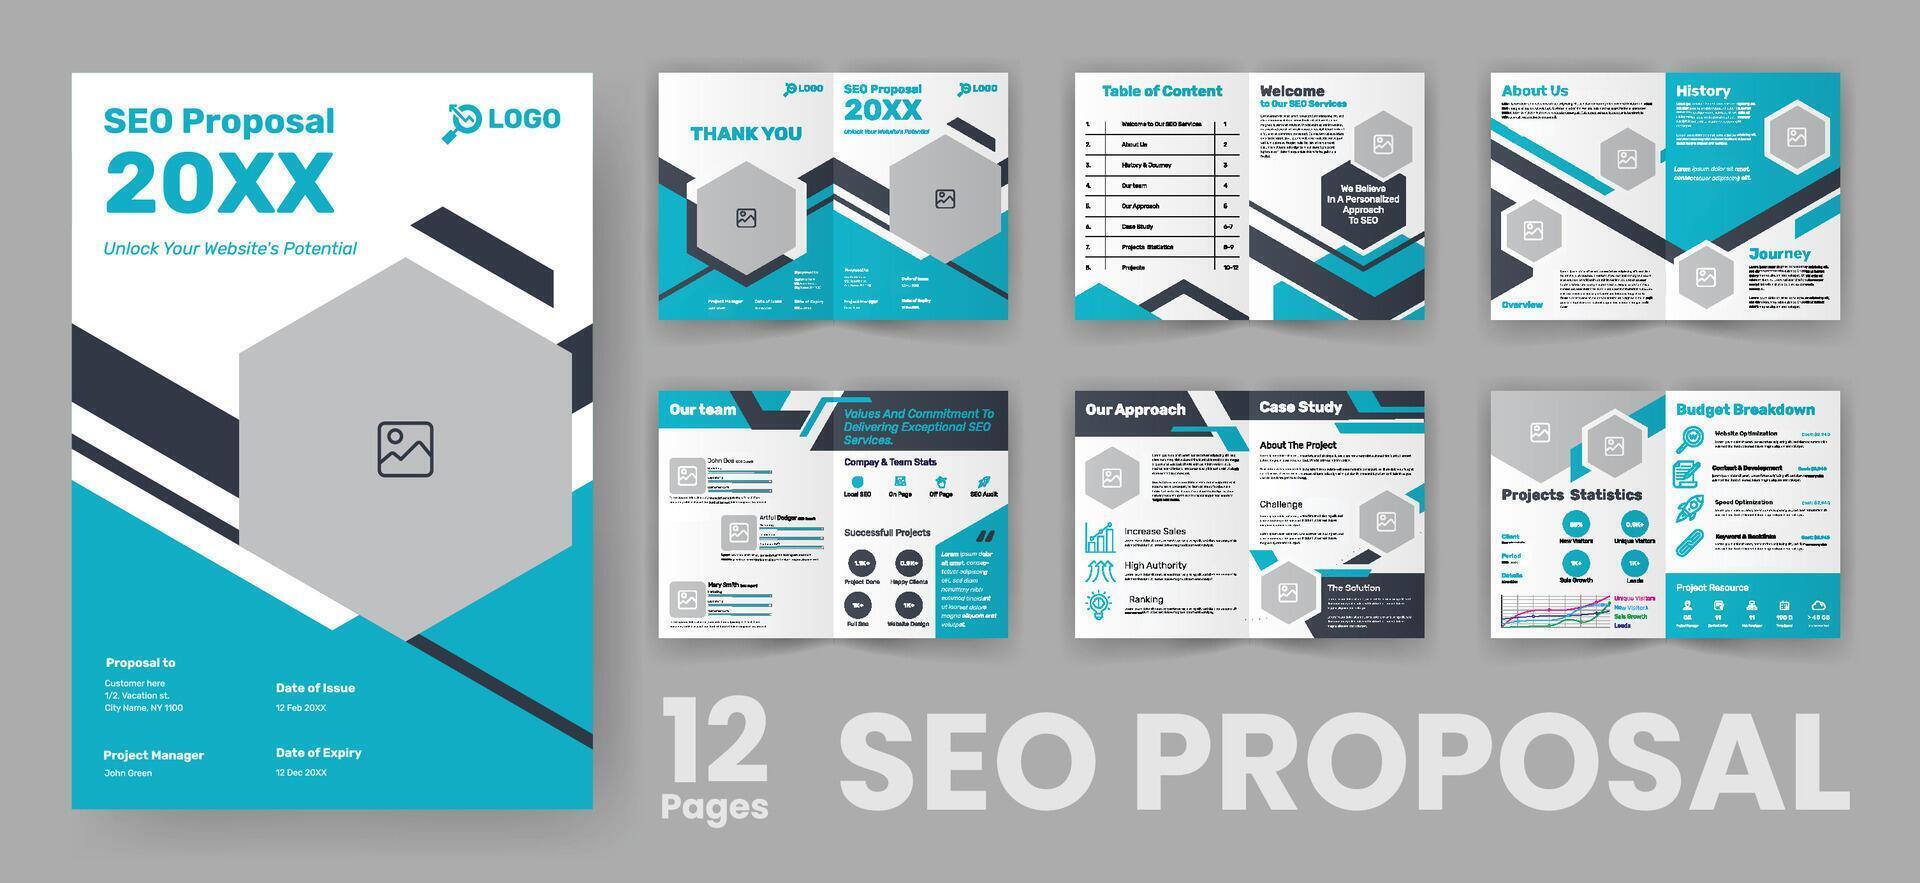 SEO Proposal Brochure Template for Web Design Business vector